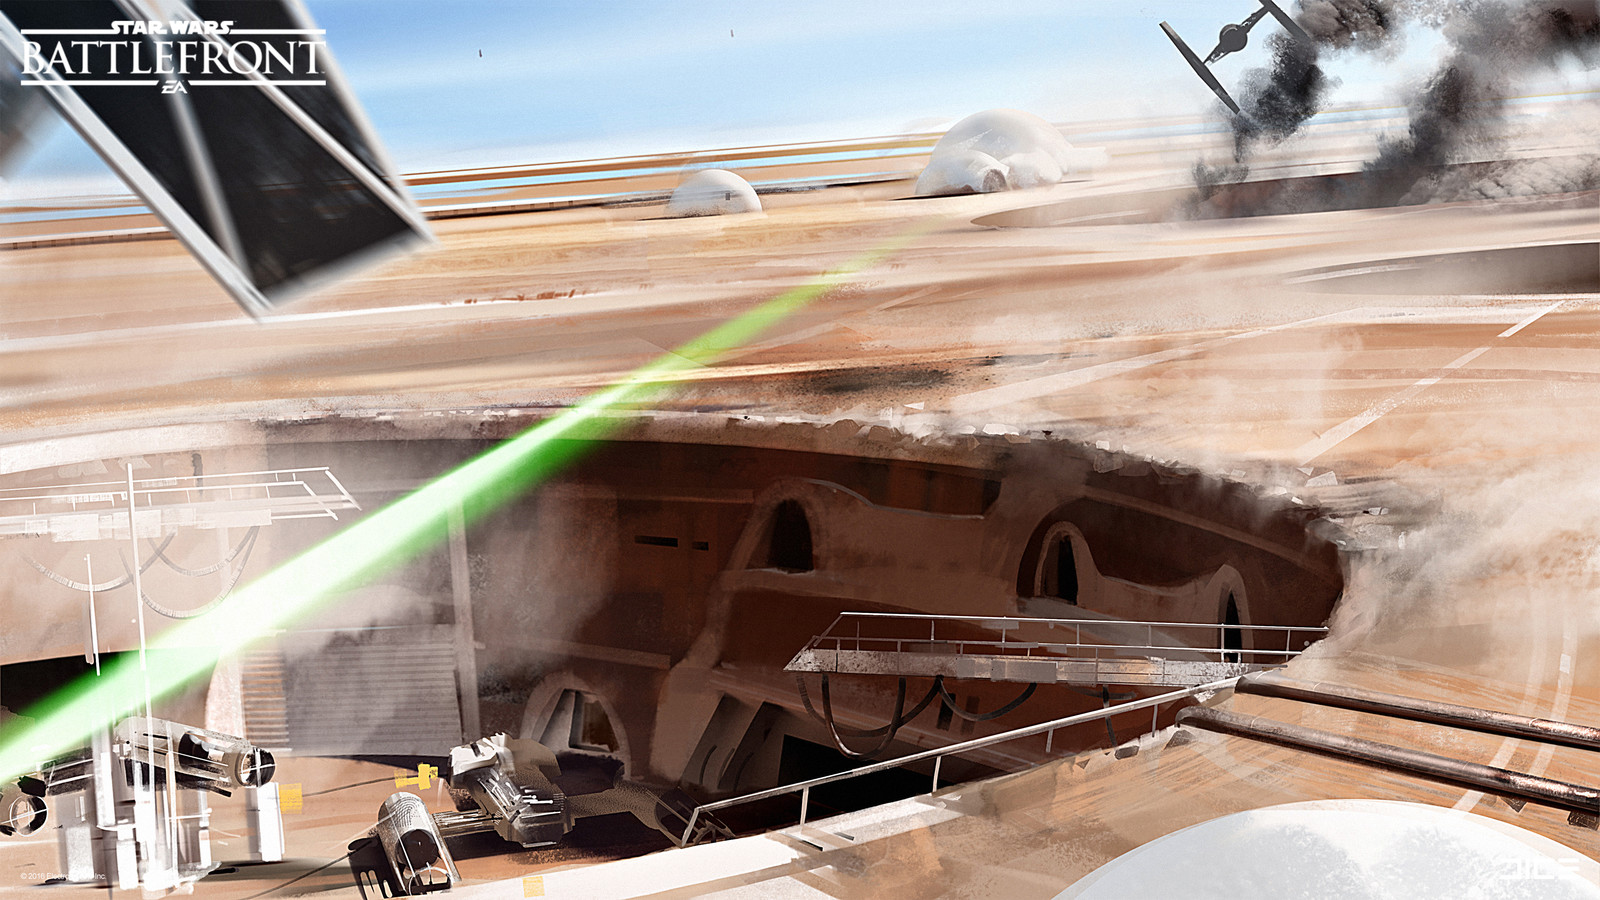 Tatooine Concept Art for the 2015 Star Wars Battlefront game. (2014)